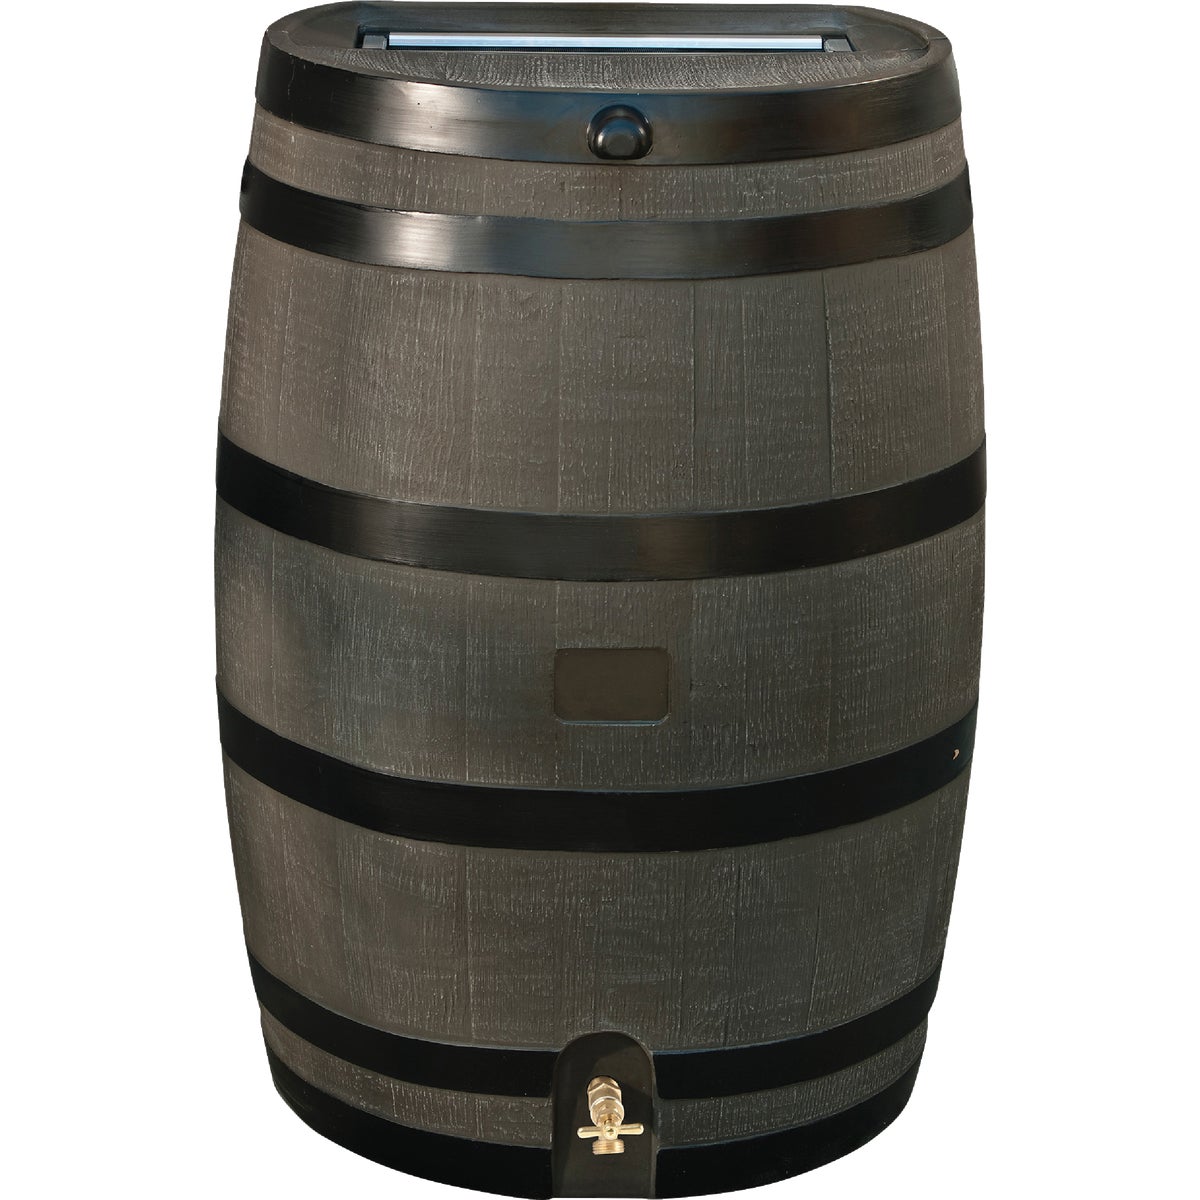 Item 704659, Woodgrain-look polyehtylene rain barrel with brass spigot.